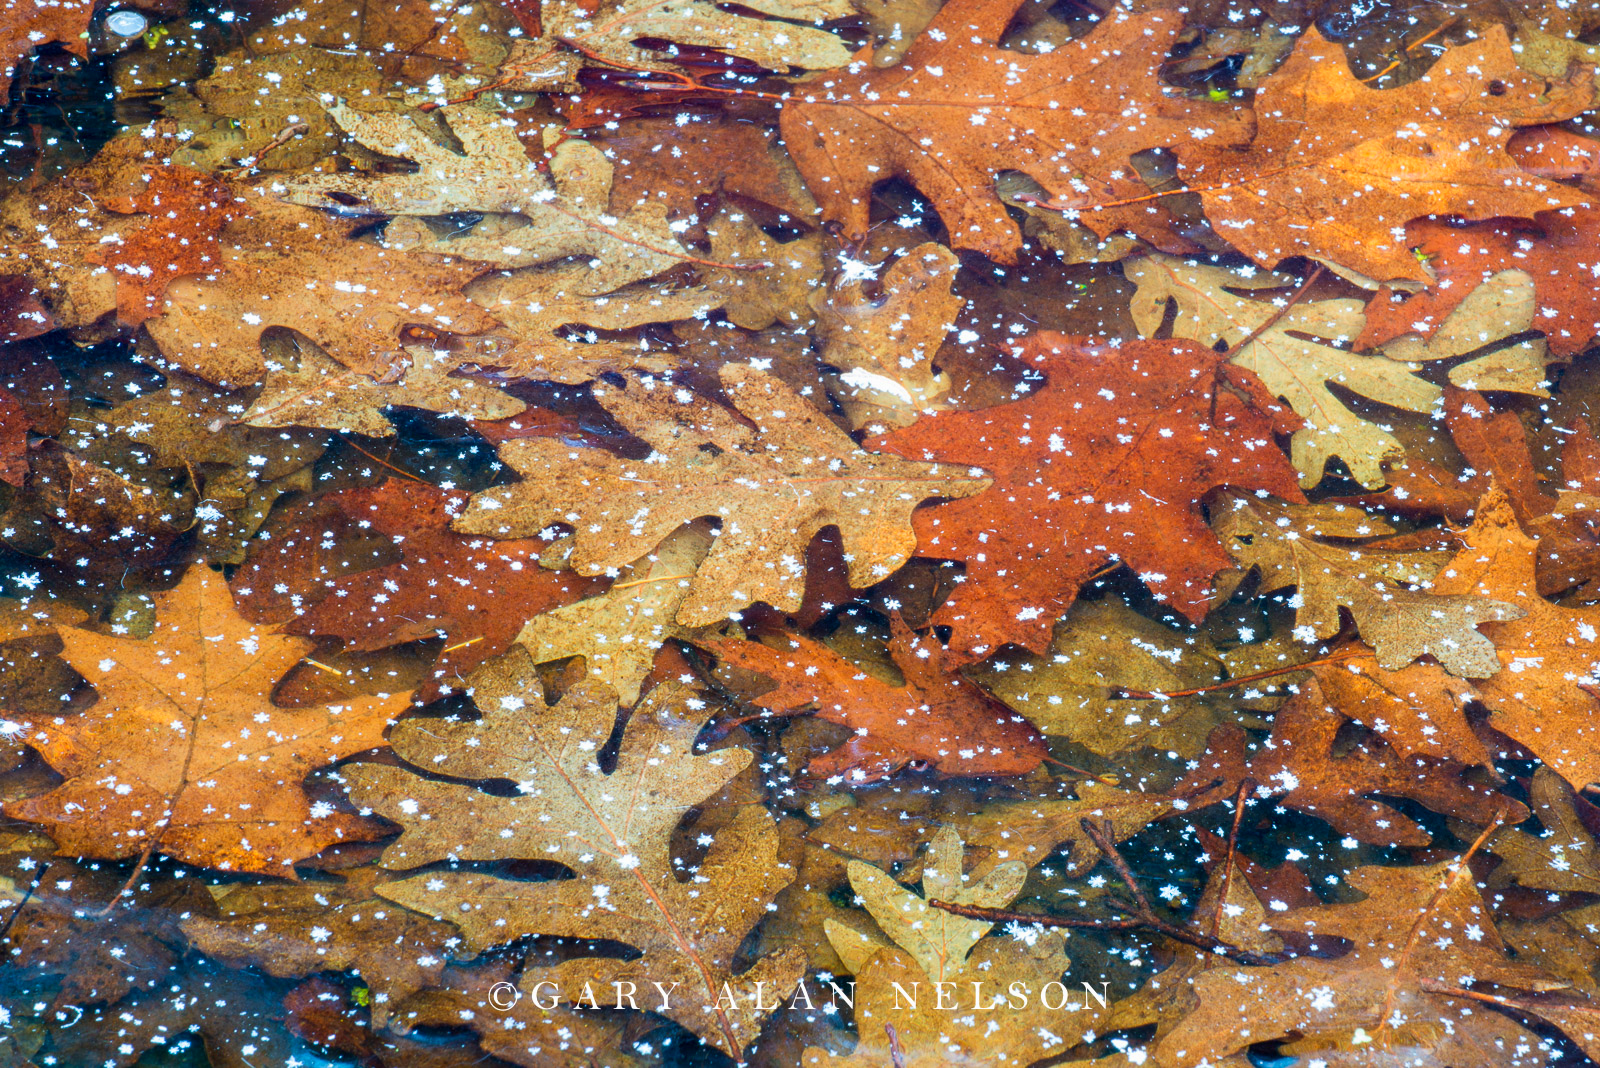 Oak leaves submerged under a layer of ice, Allemansratt Park, Lindstrom, Minnesota